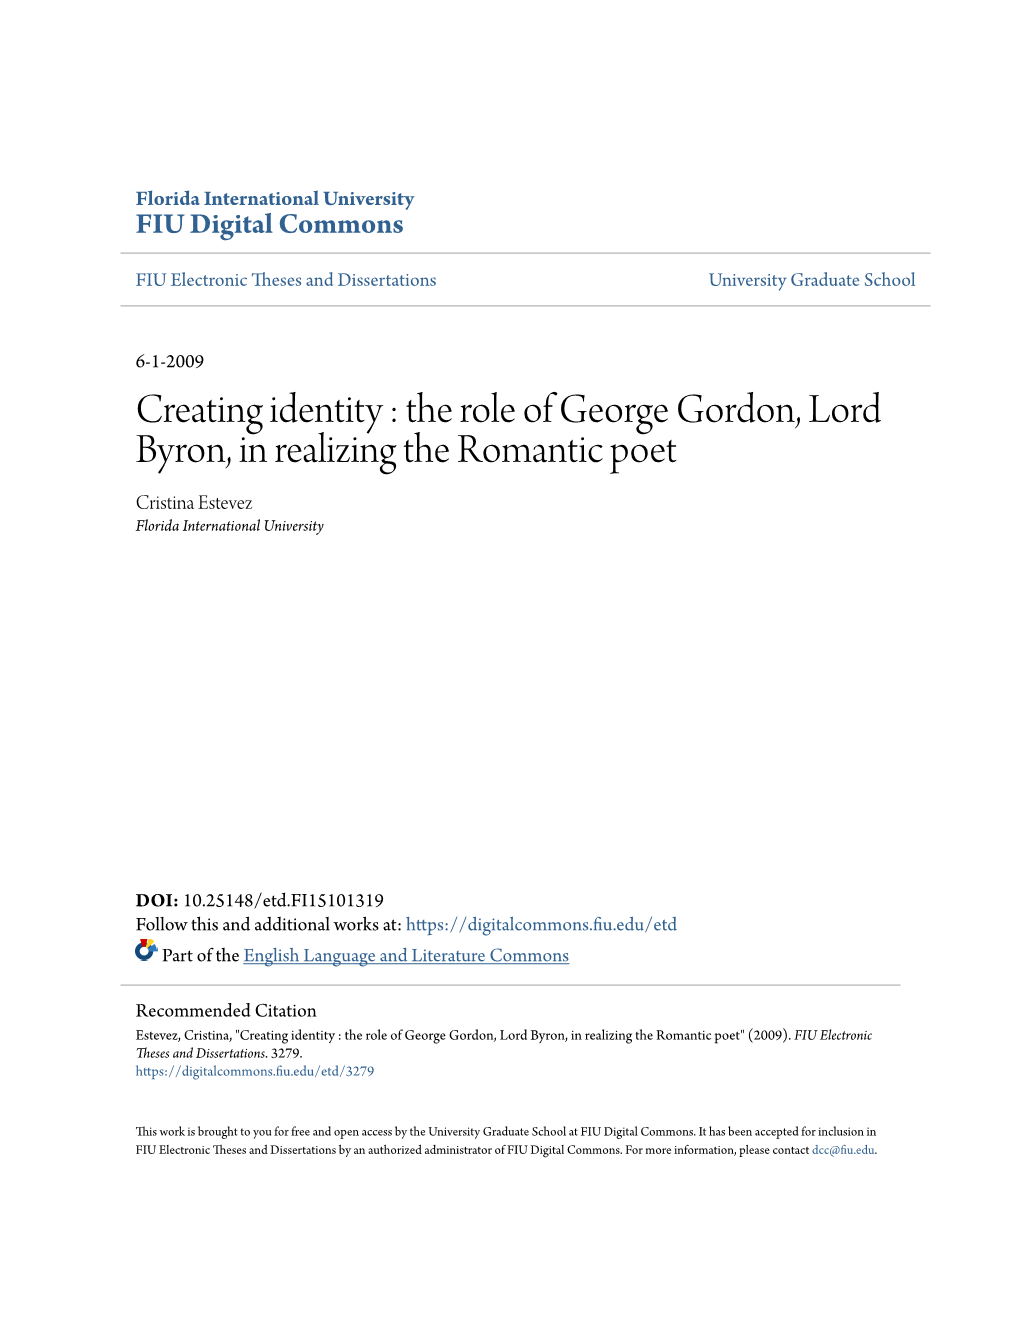 The Role of George Gordon, Lord Byron, in Realizing the Romantic Poet Cristina Estevez Florida International University